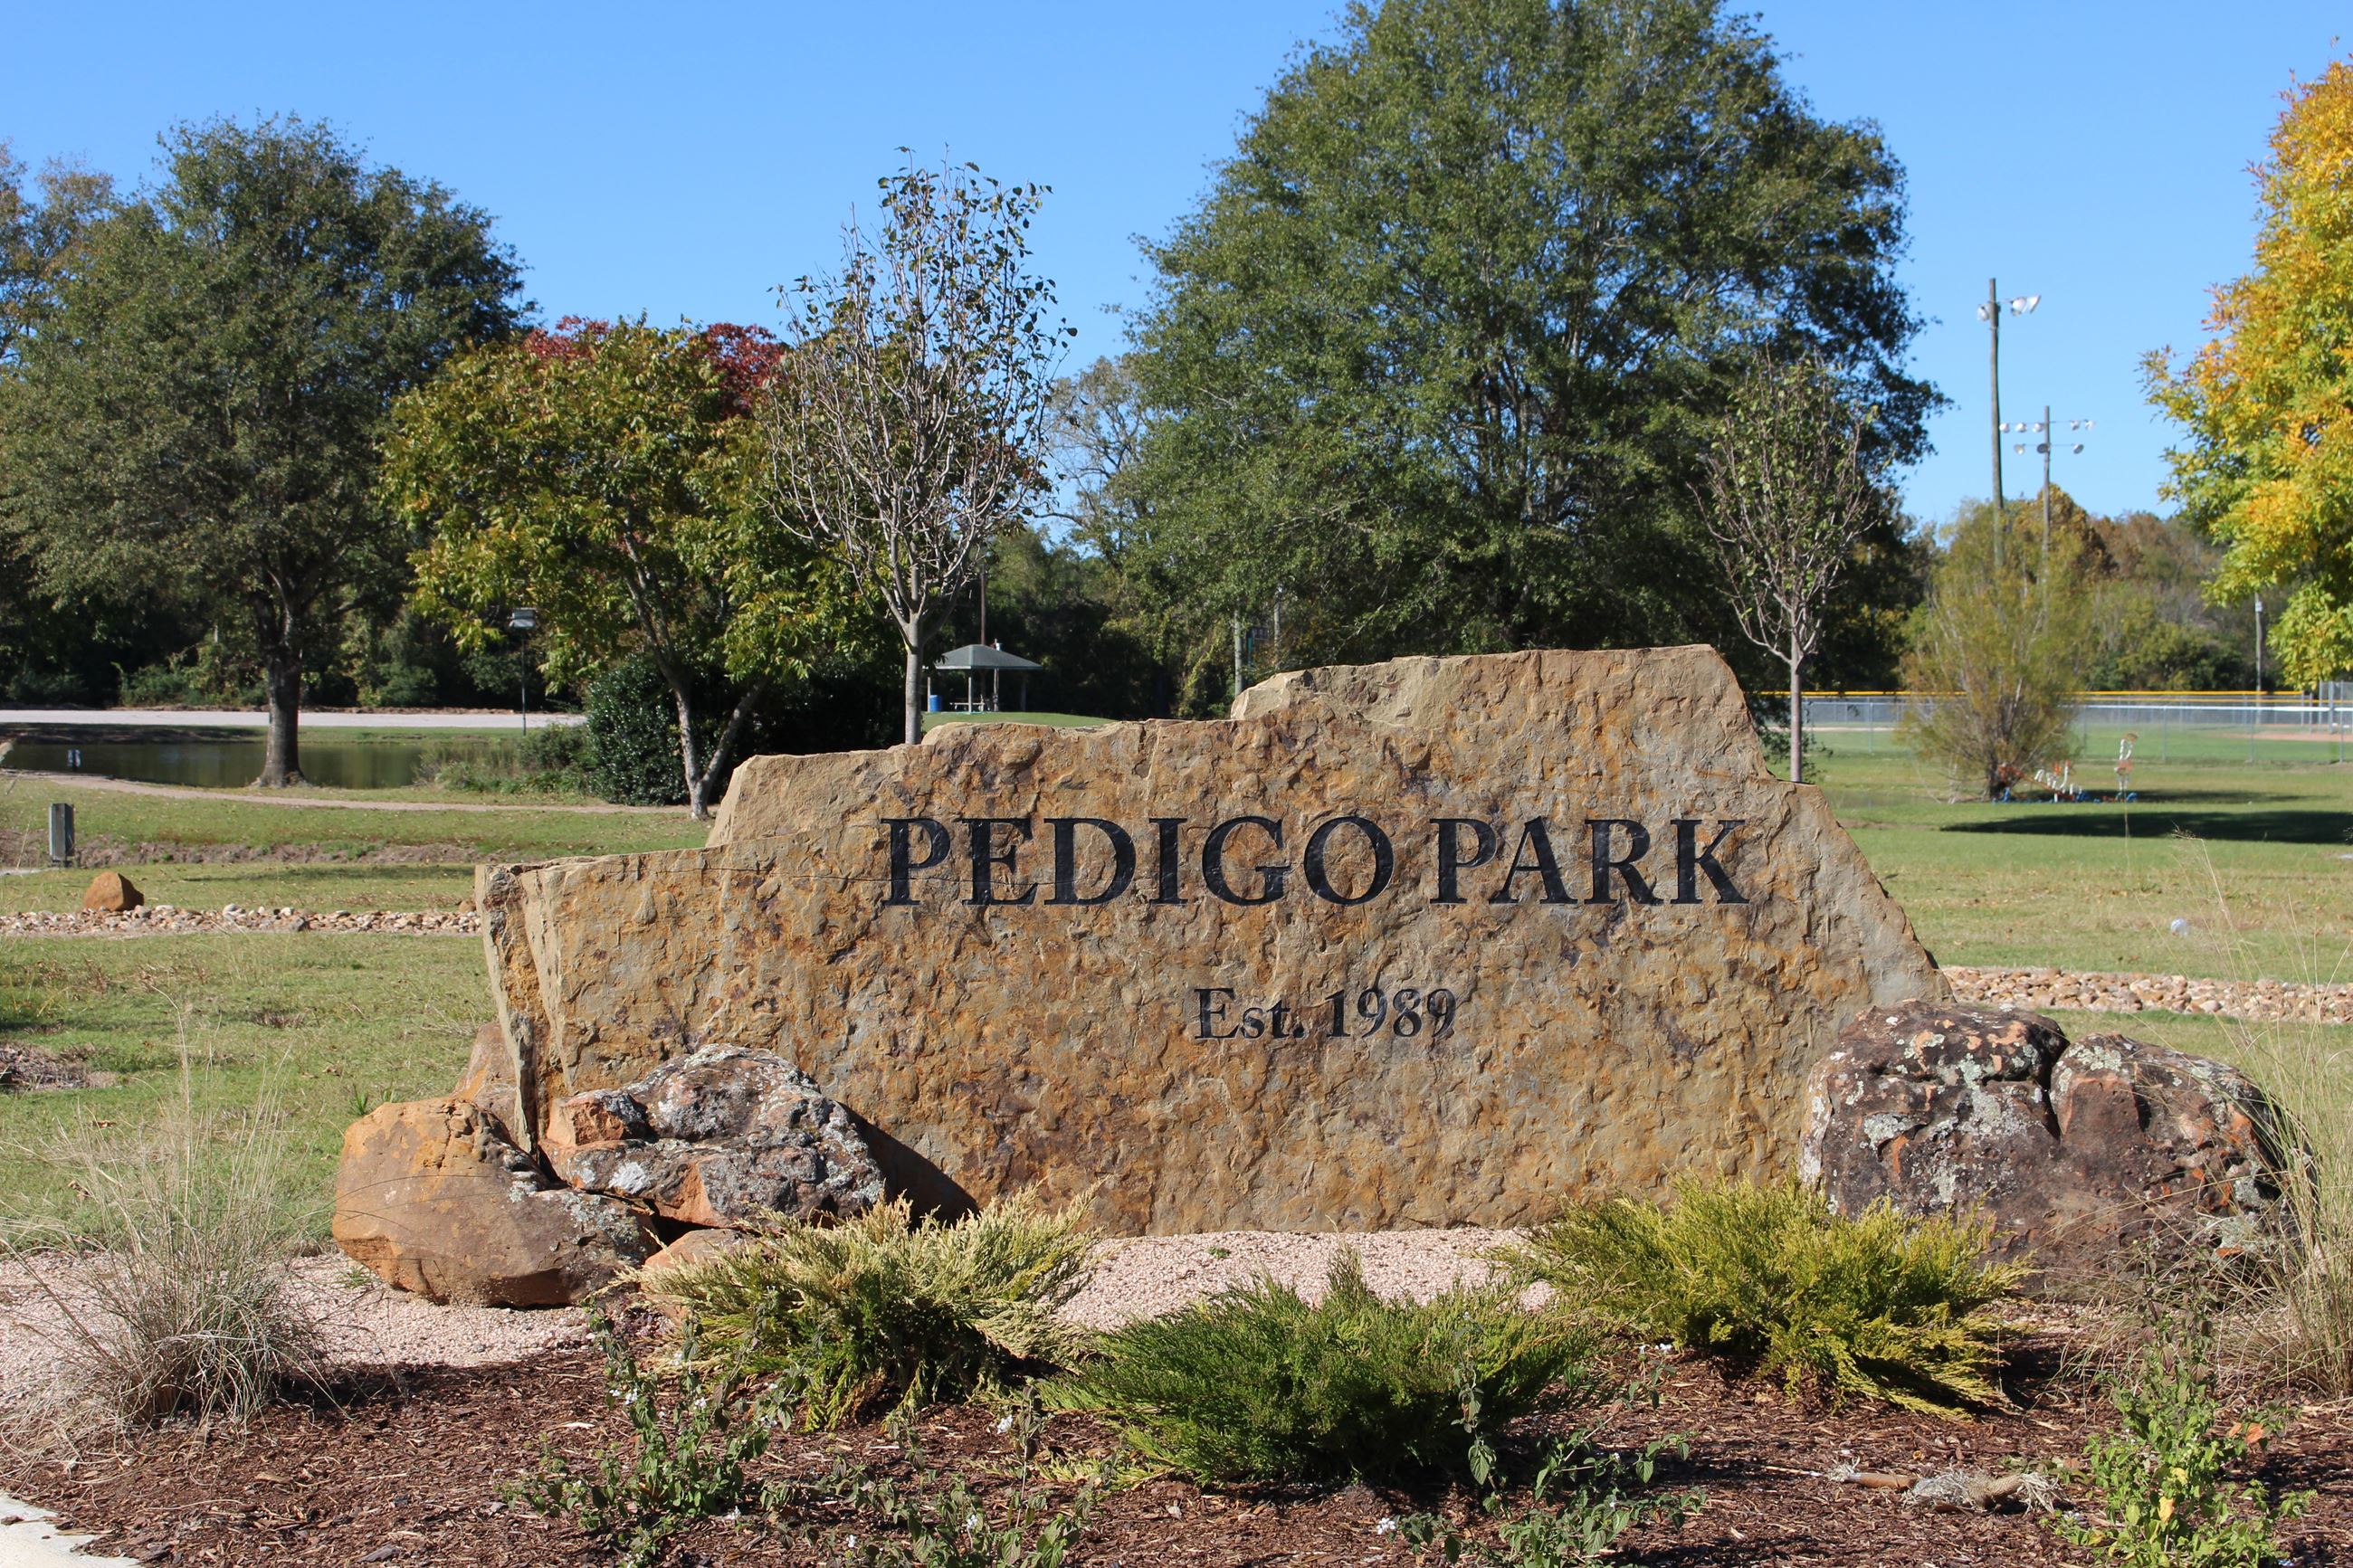 Pedigo Park in Livingston, Texas ... established in 1989